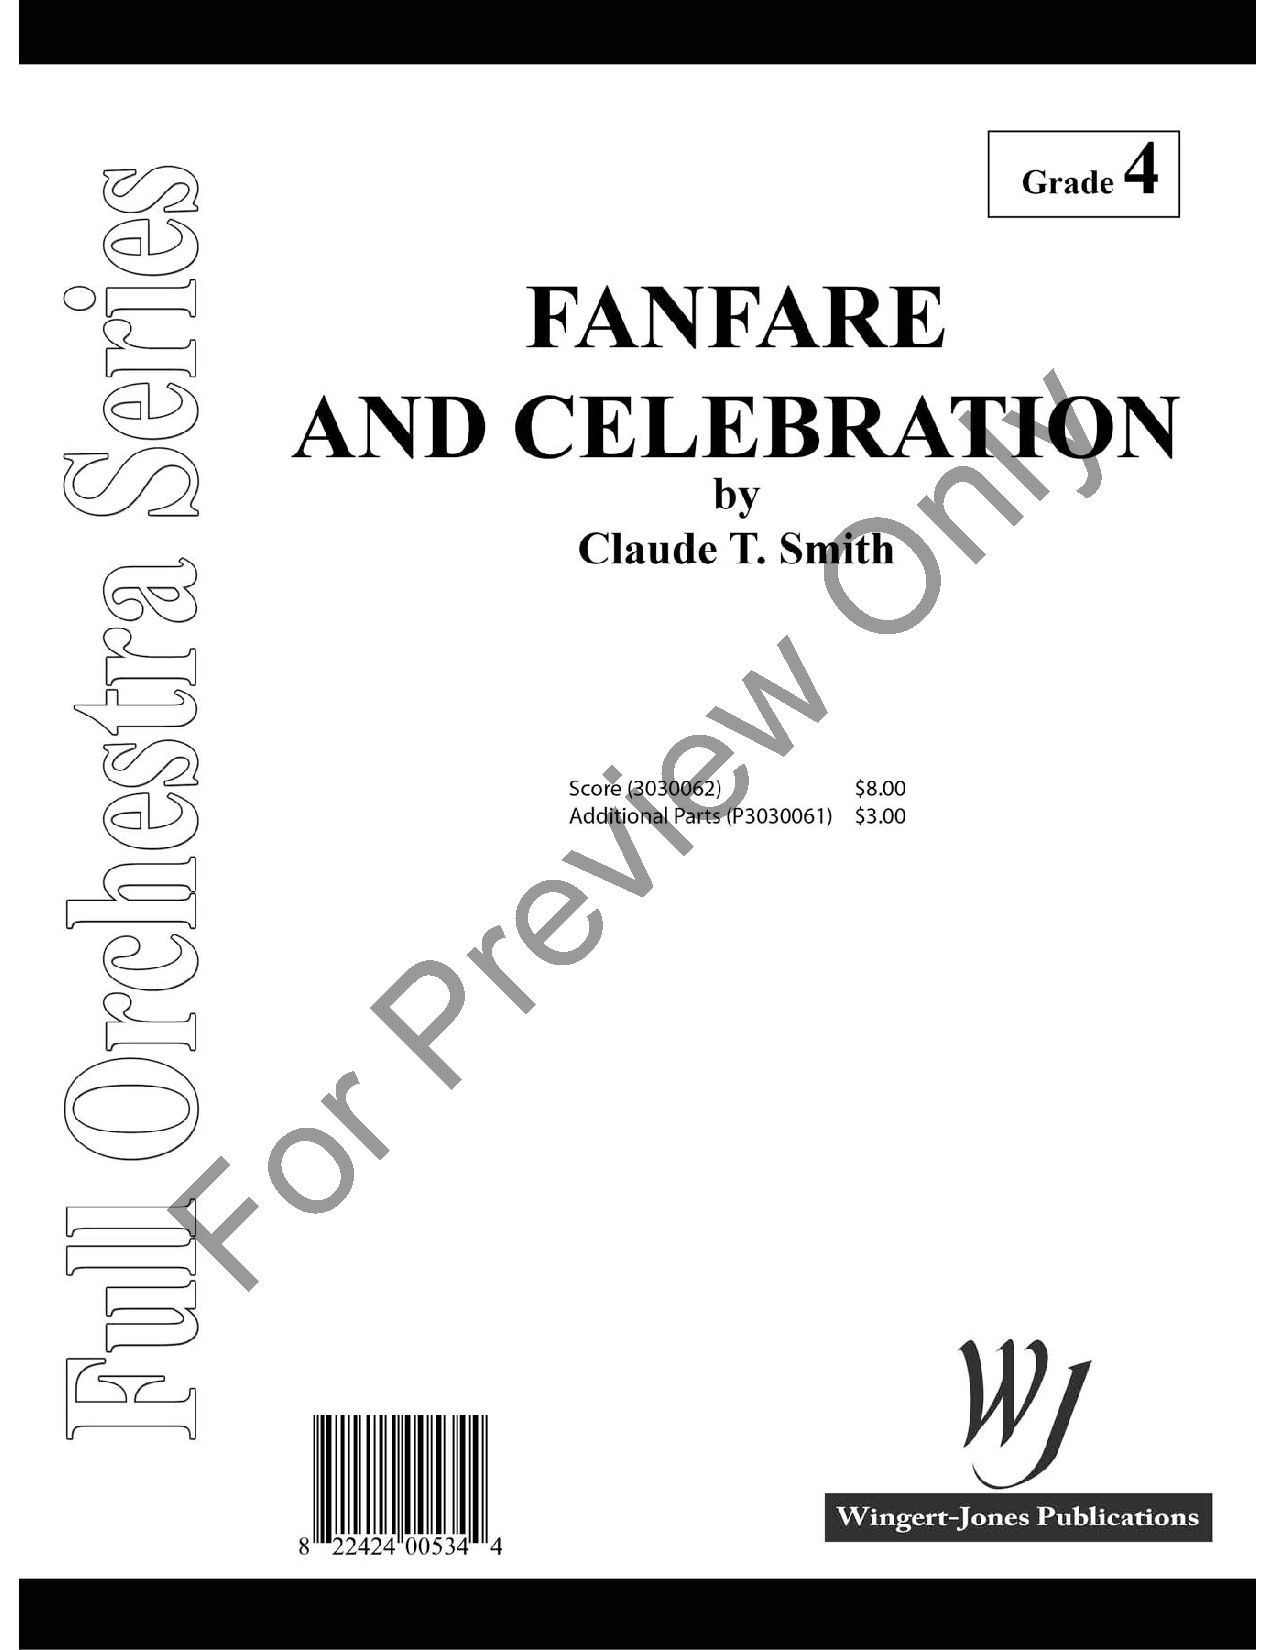 Fanfare and Celebration